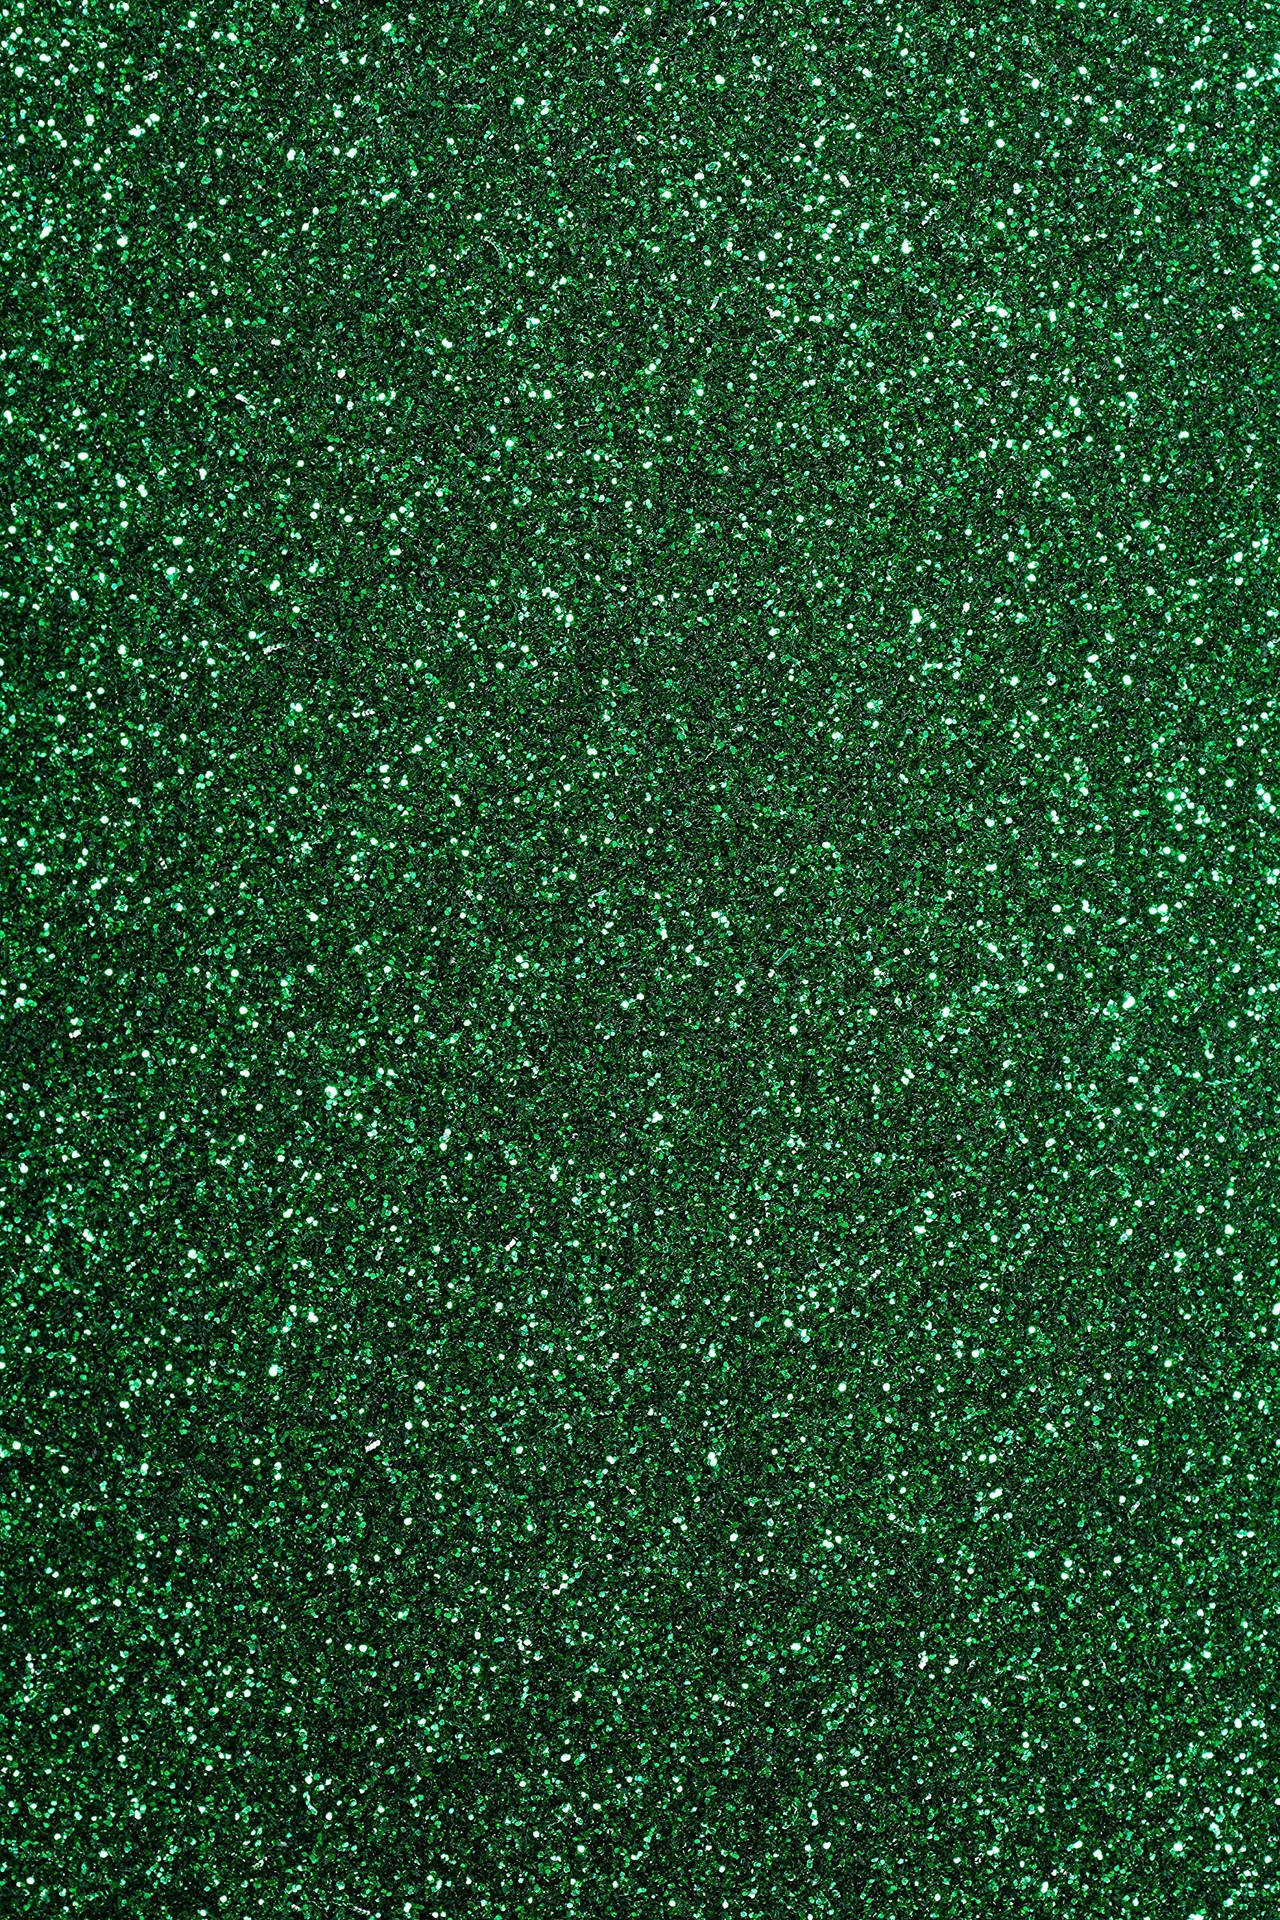 Green Glitter 1707 X 2560 Wallpaper